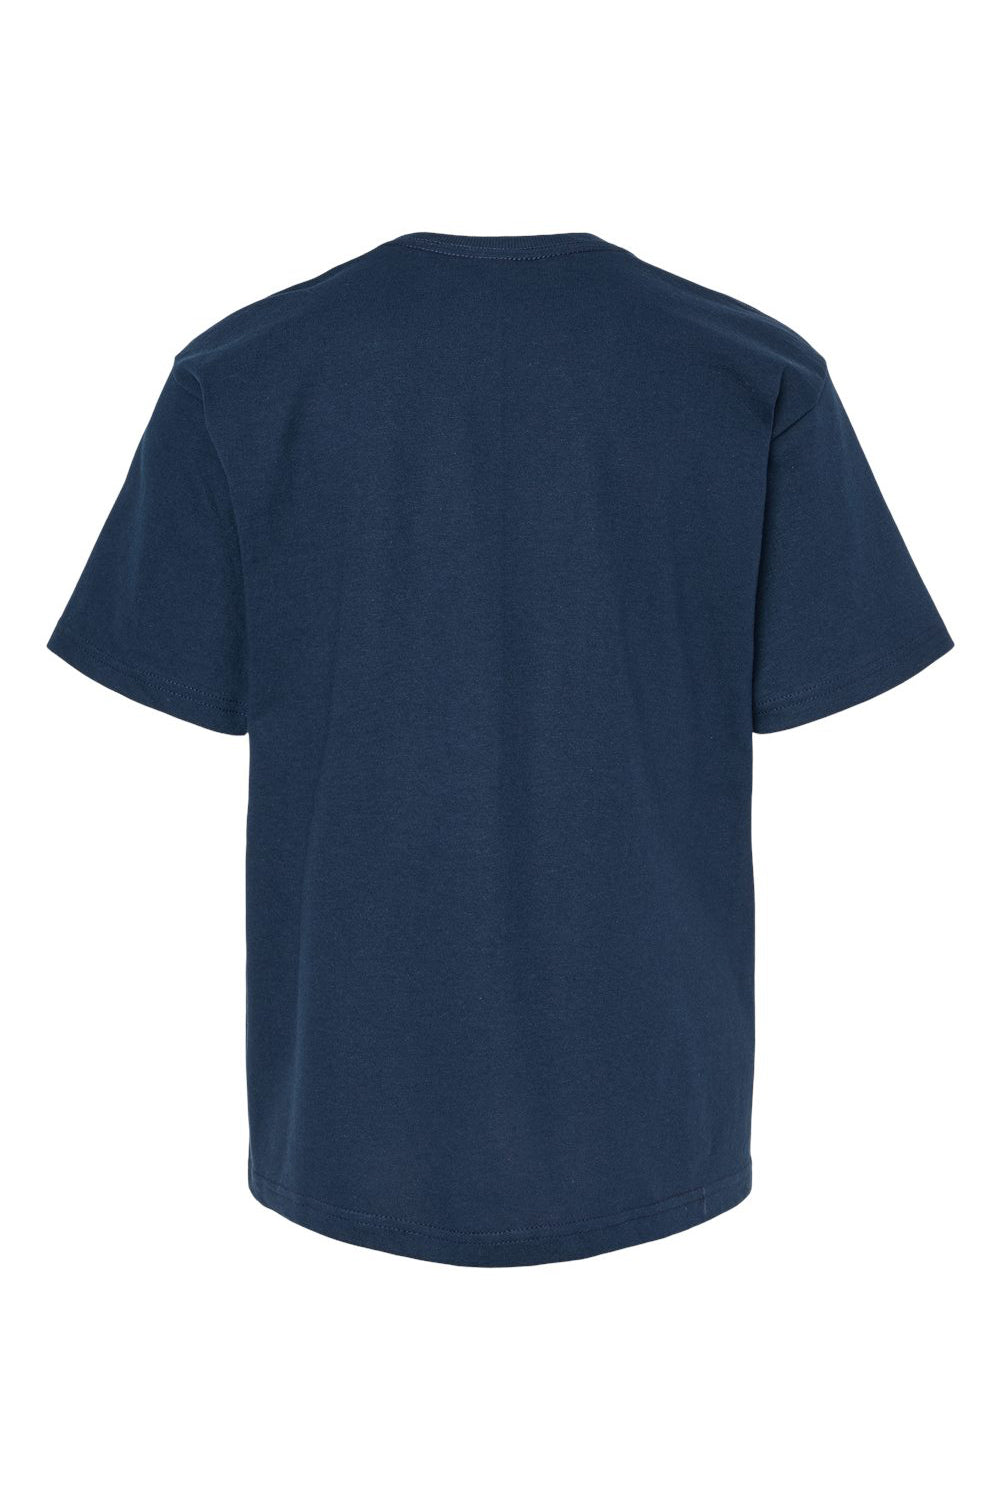 M&O 4850 Youth Gold Soft Touch Short Sleeve Crewneck T-Shirt Deep Navy Blue Flat Back